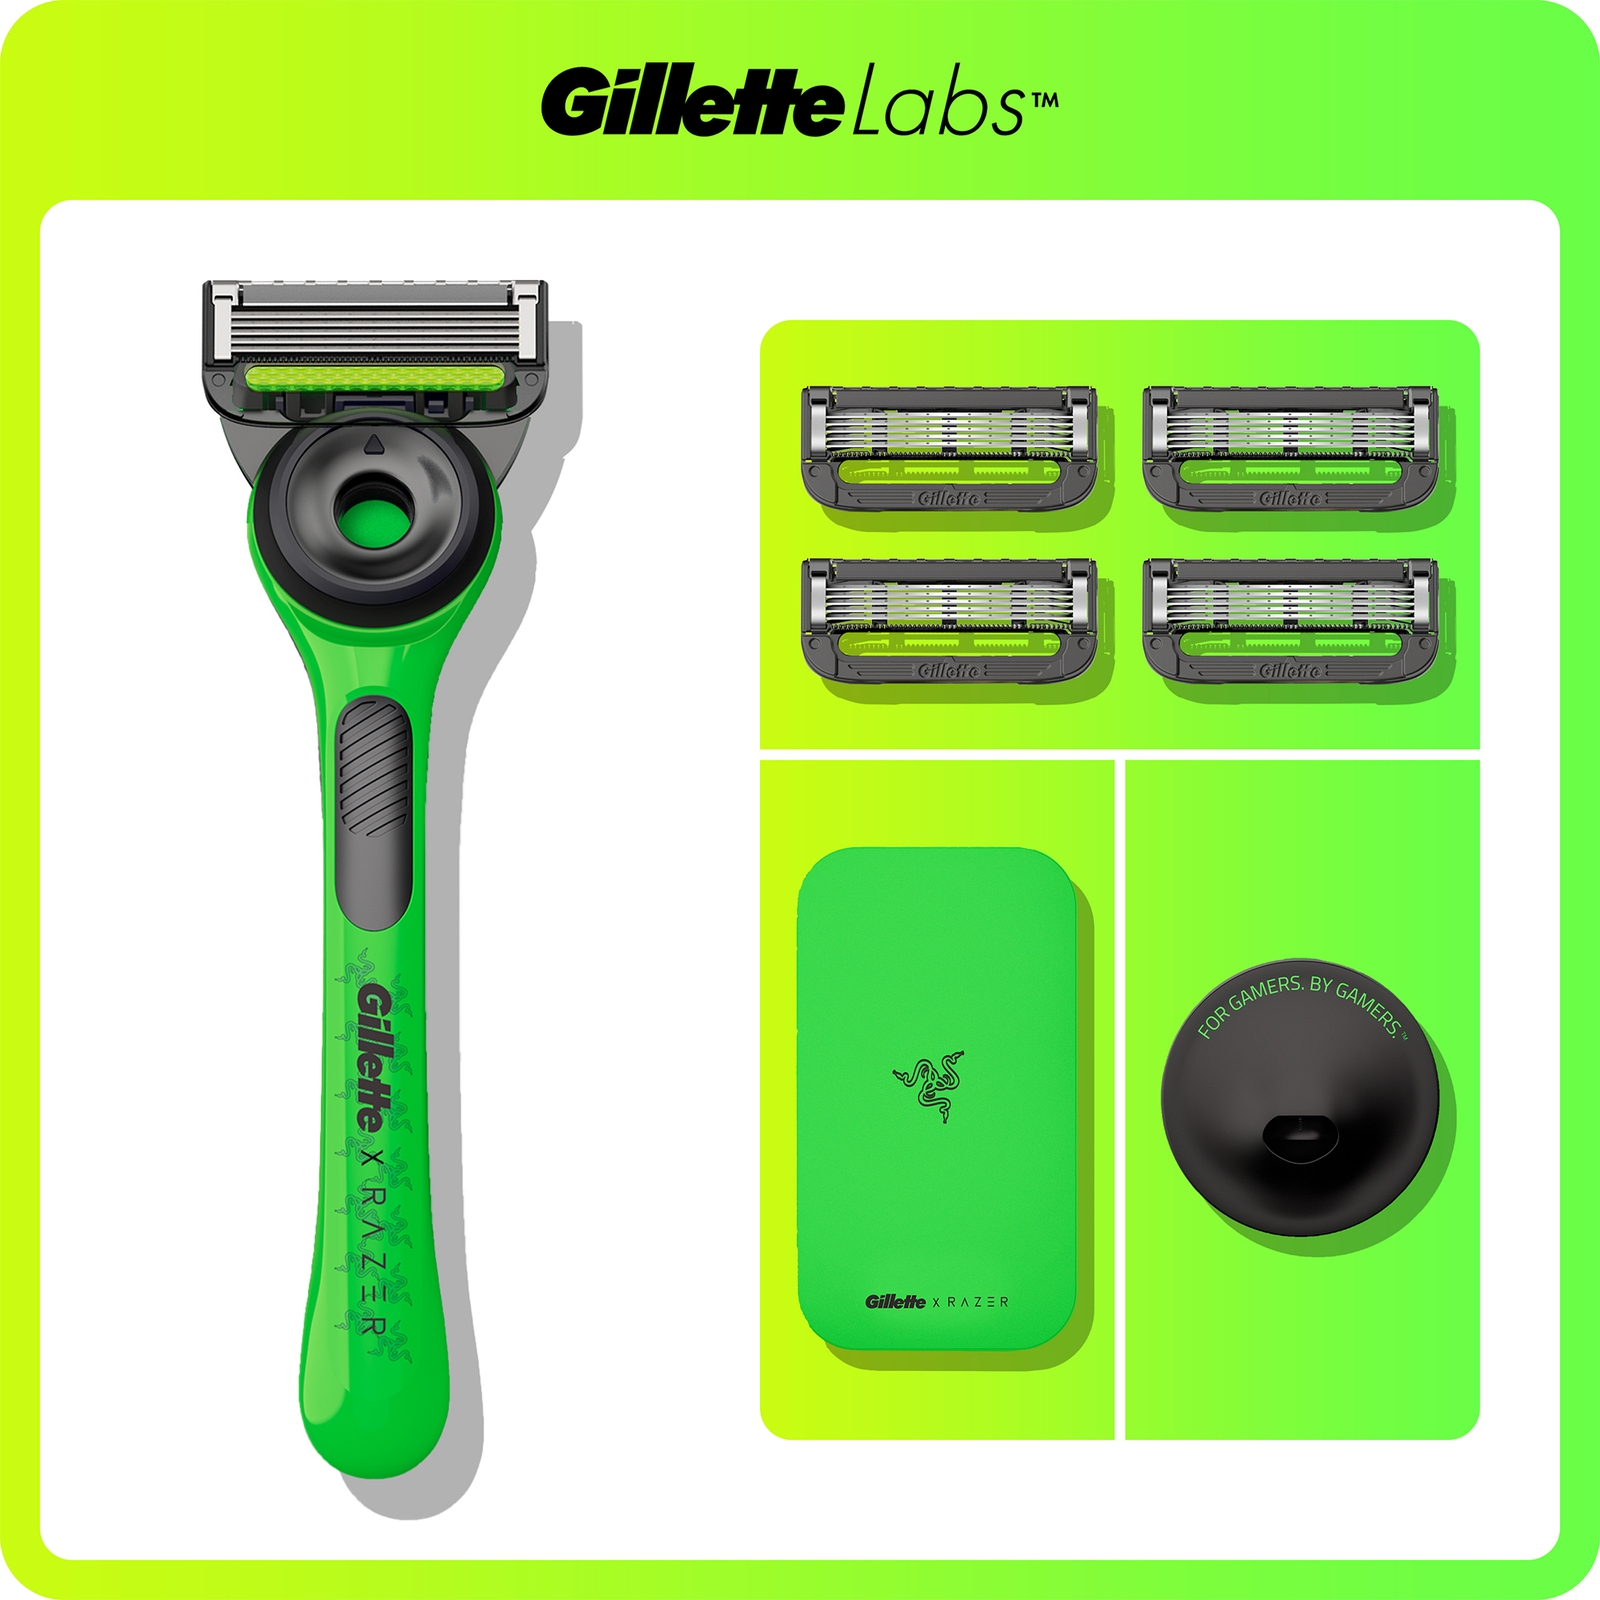 Gillette Labs Razer Razor Limited Edition - With Travel Case & 4 Blade Refills